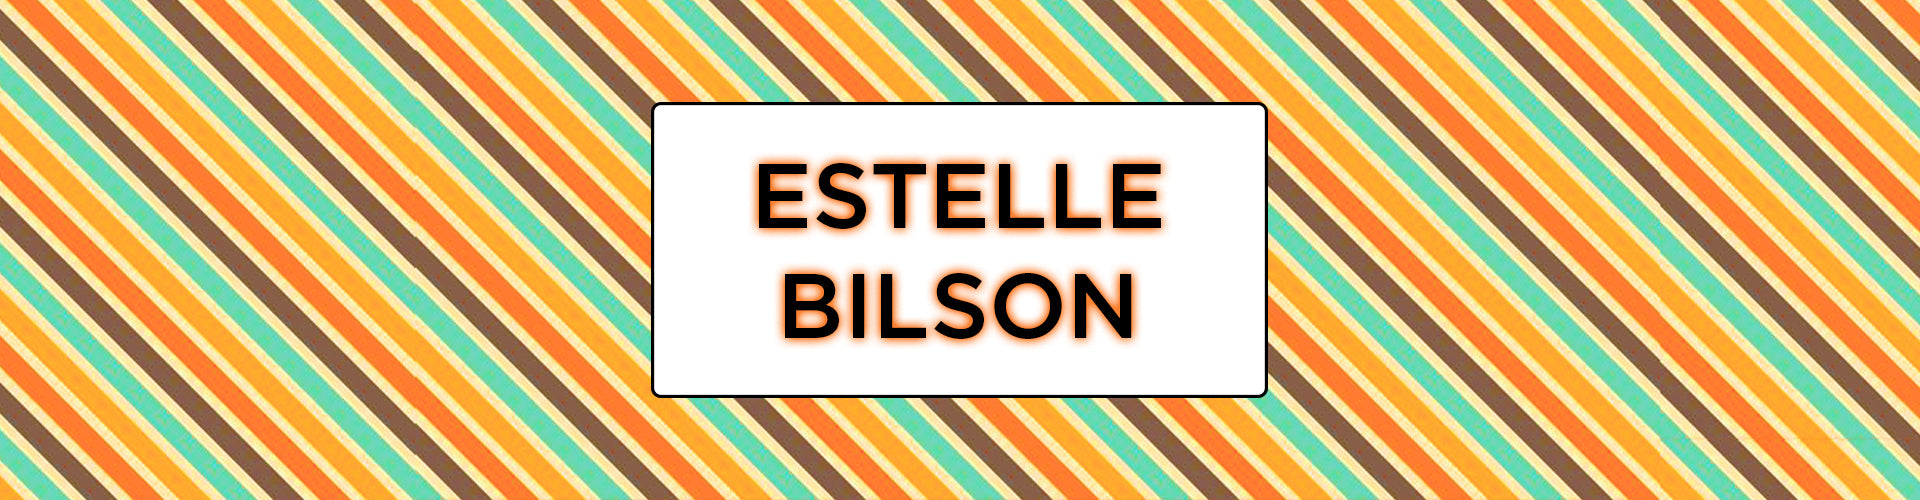 Women We Watch: Estelle Bilson